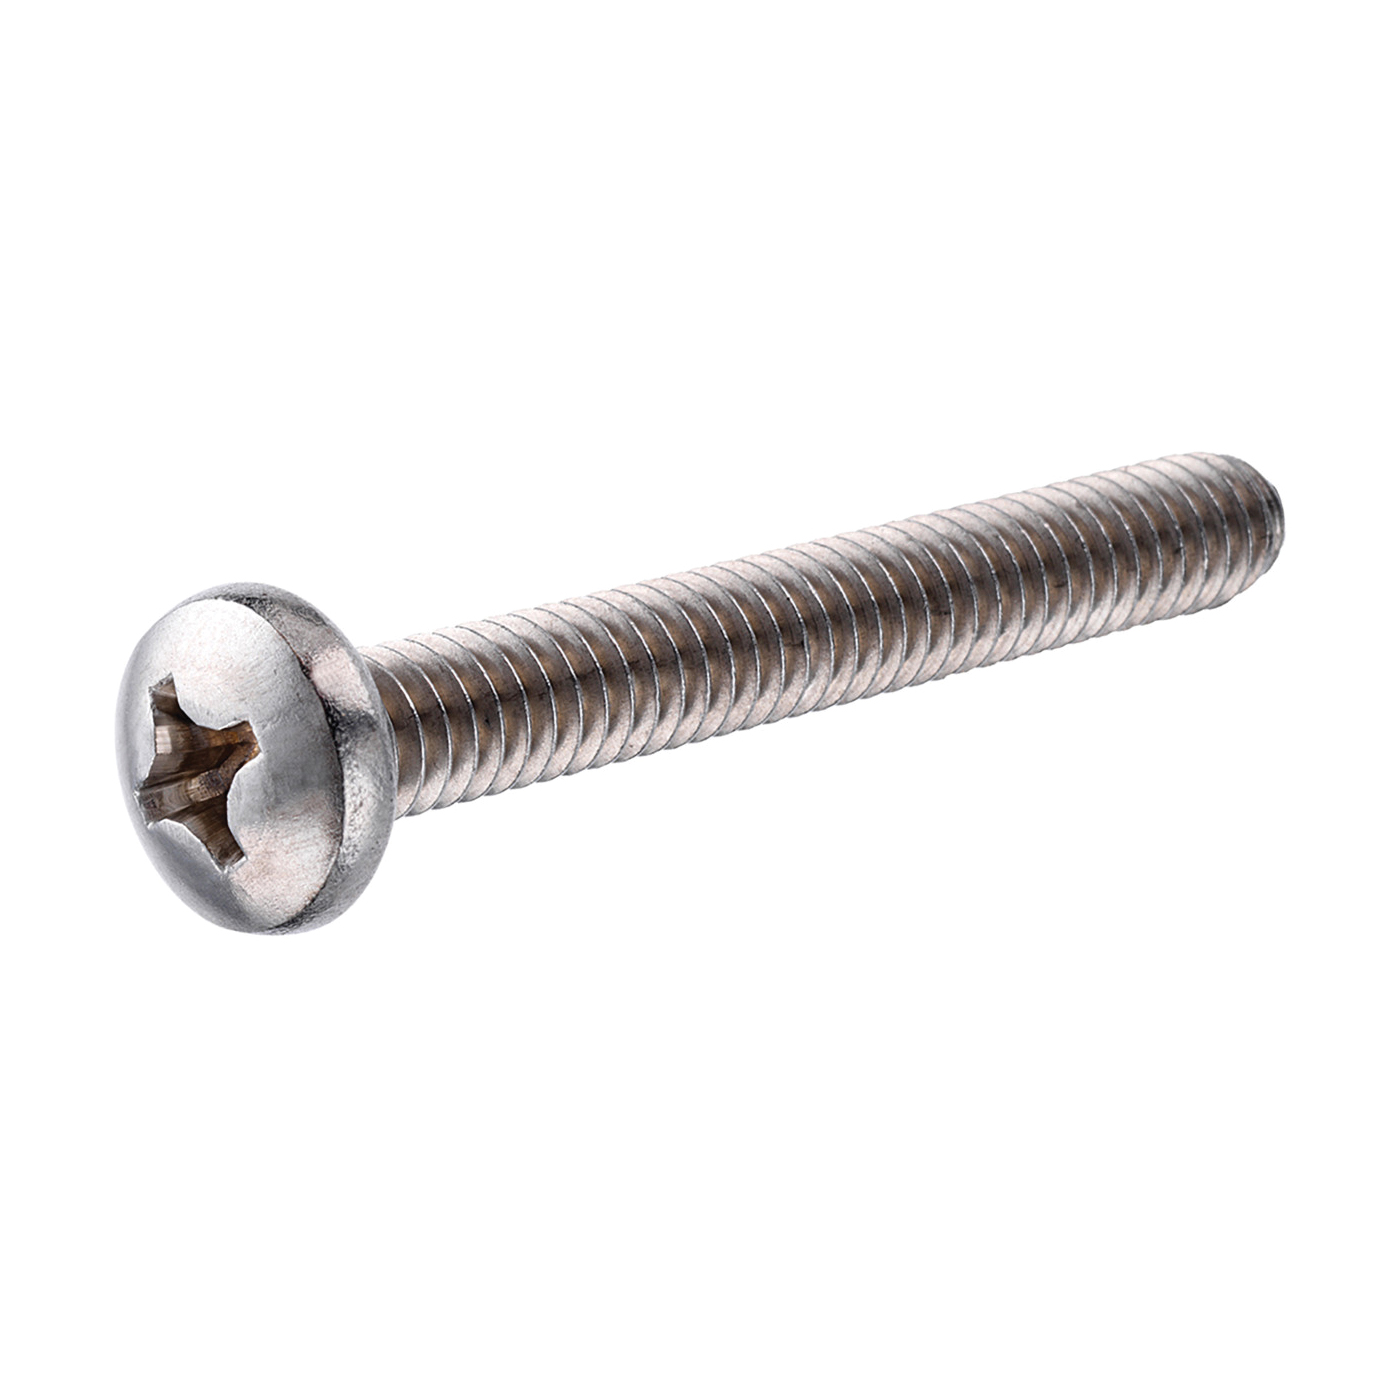 881148 Machine Screw, #6-32 Thread, 3/8 in L, Coarse Thread, Pan Head, Phillips Drive, Stainless Steel